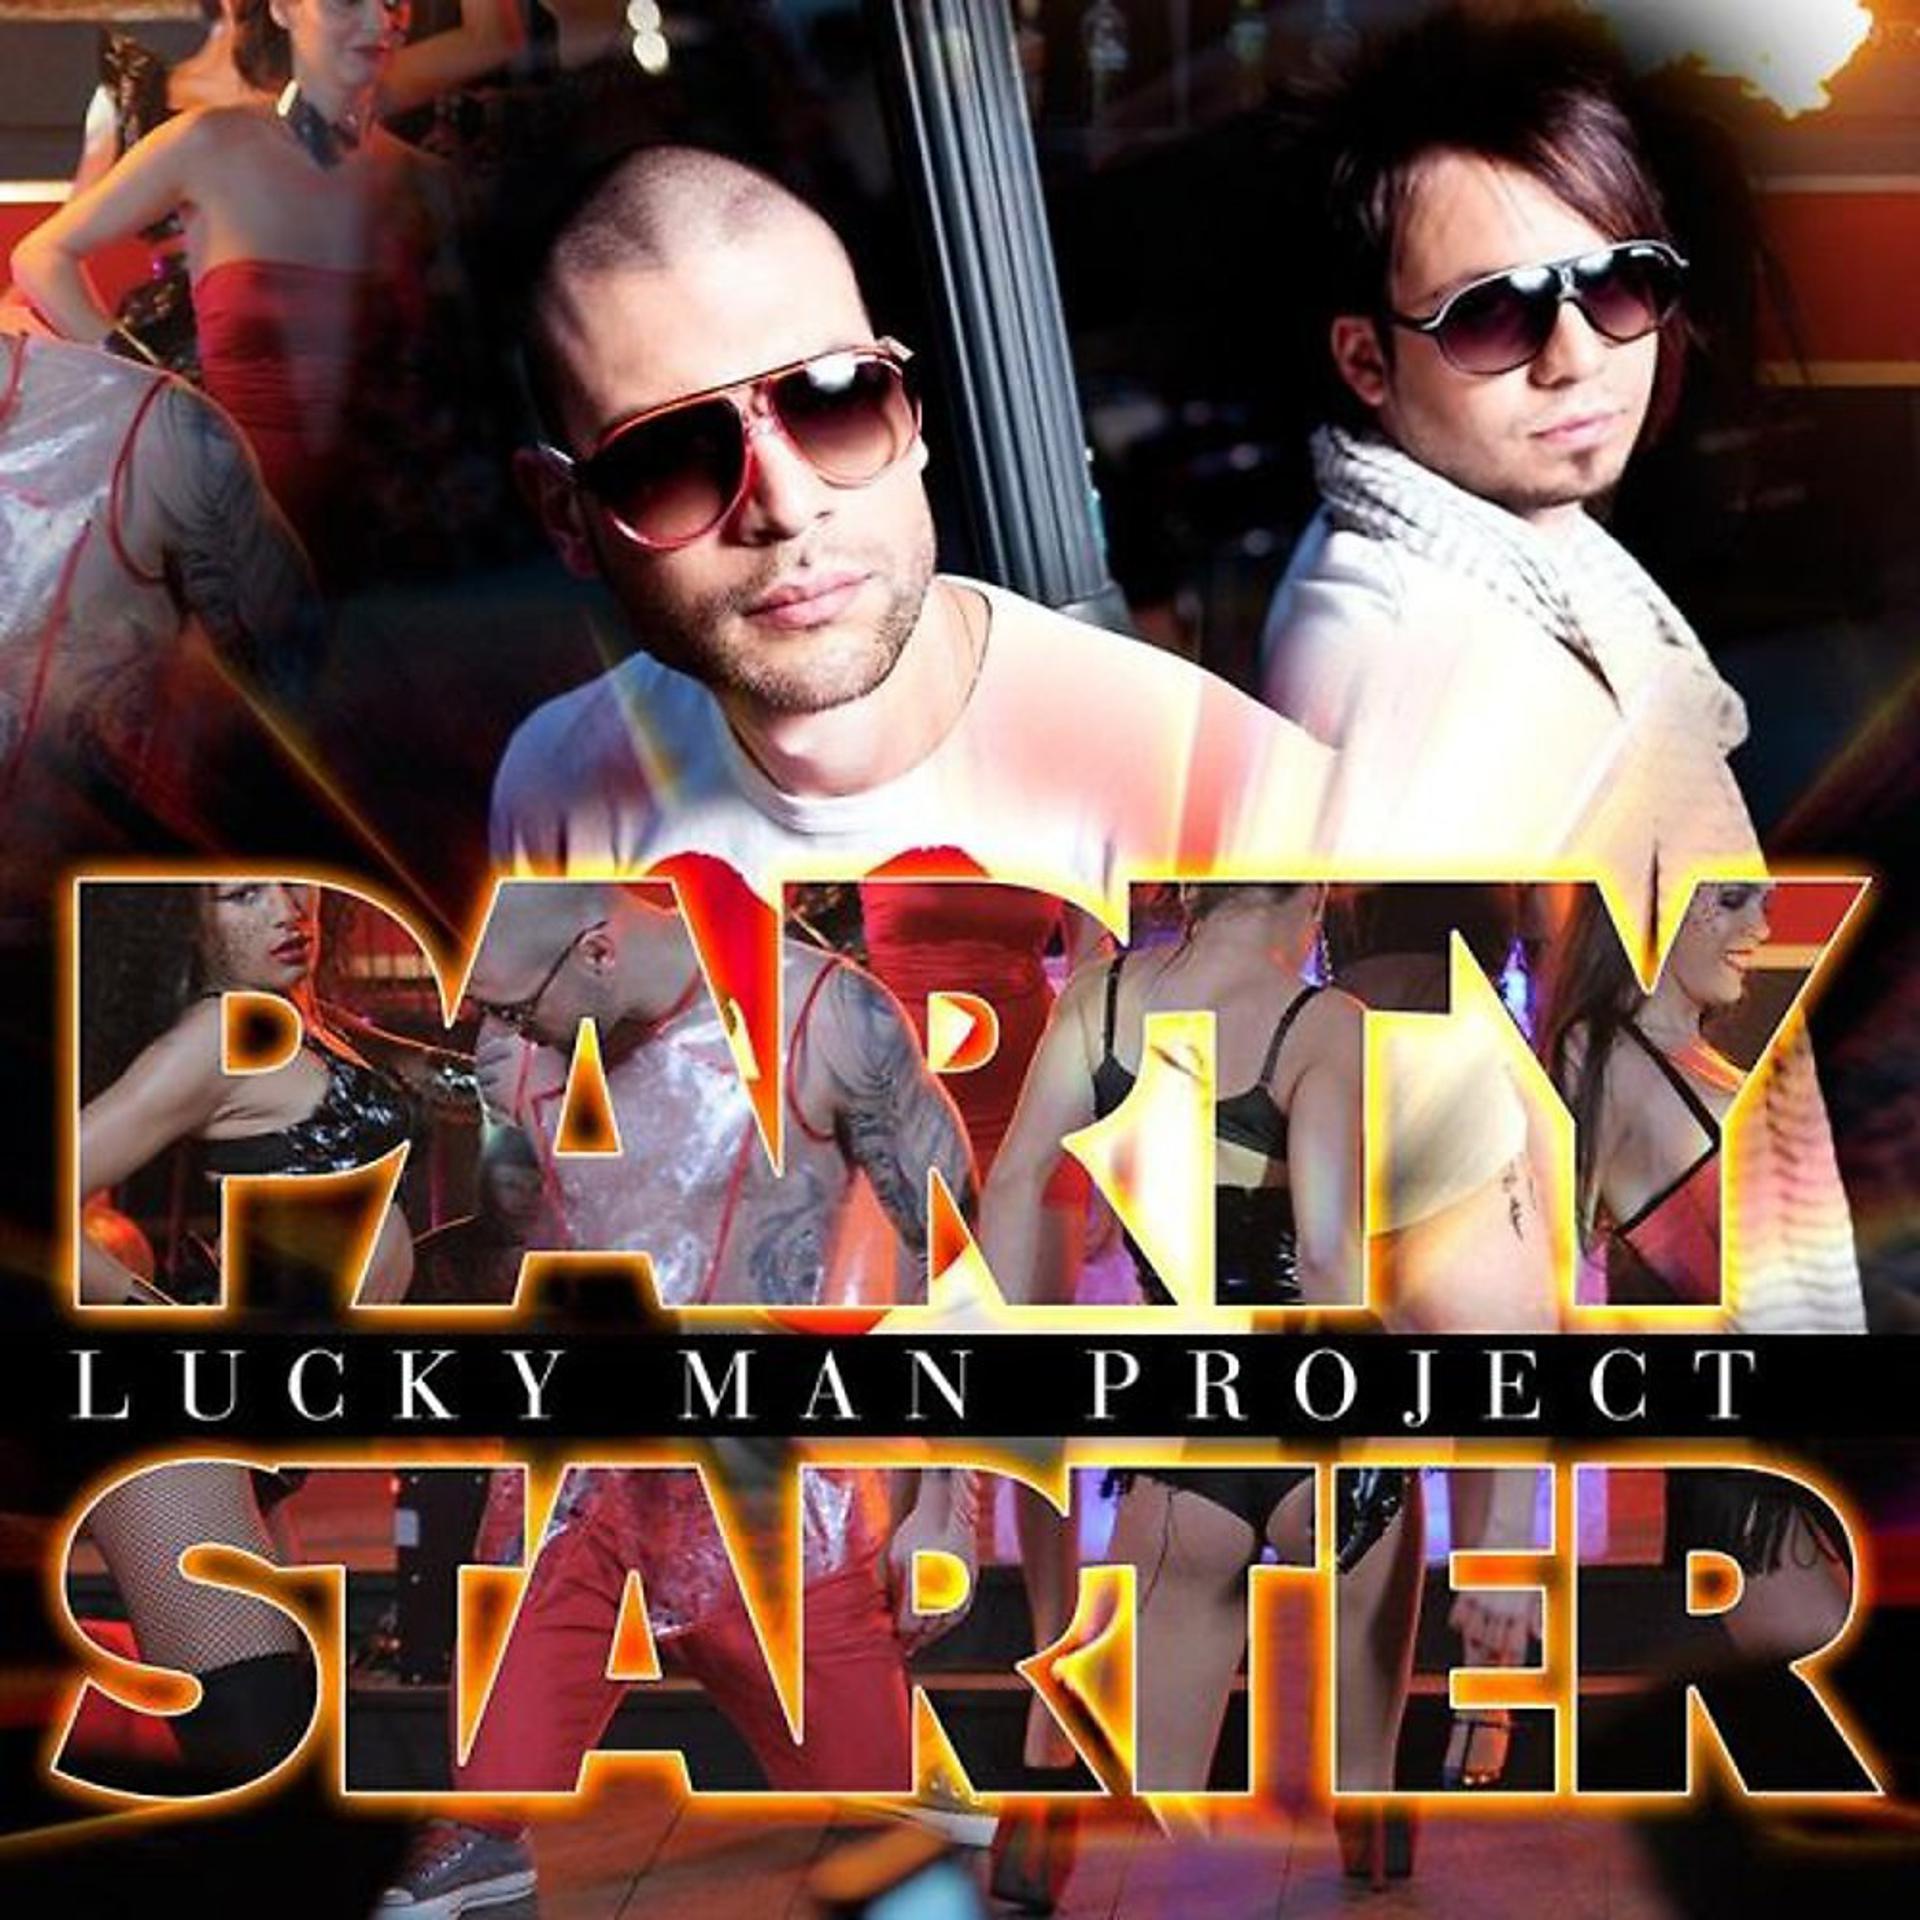 Постер альбома Party Starter